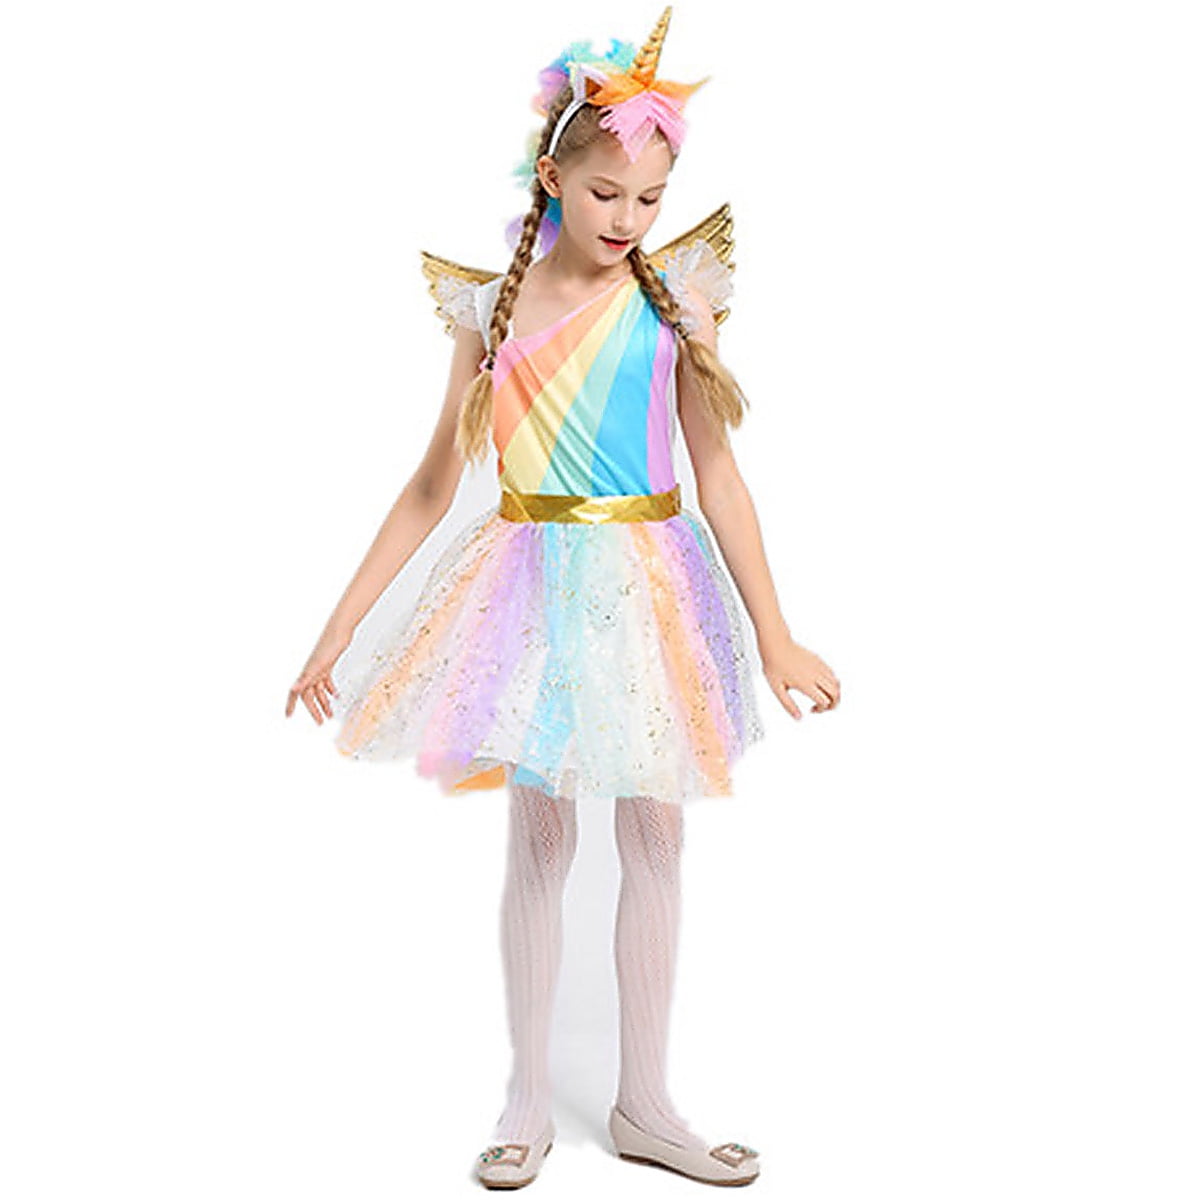 Girls Unicorn Costume Sequin Rainbow Fancy Dress Up Kid Baby Princess Cosplay Birthday Party Halloween Outfit Headband 